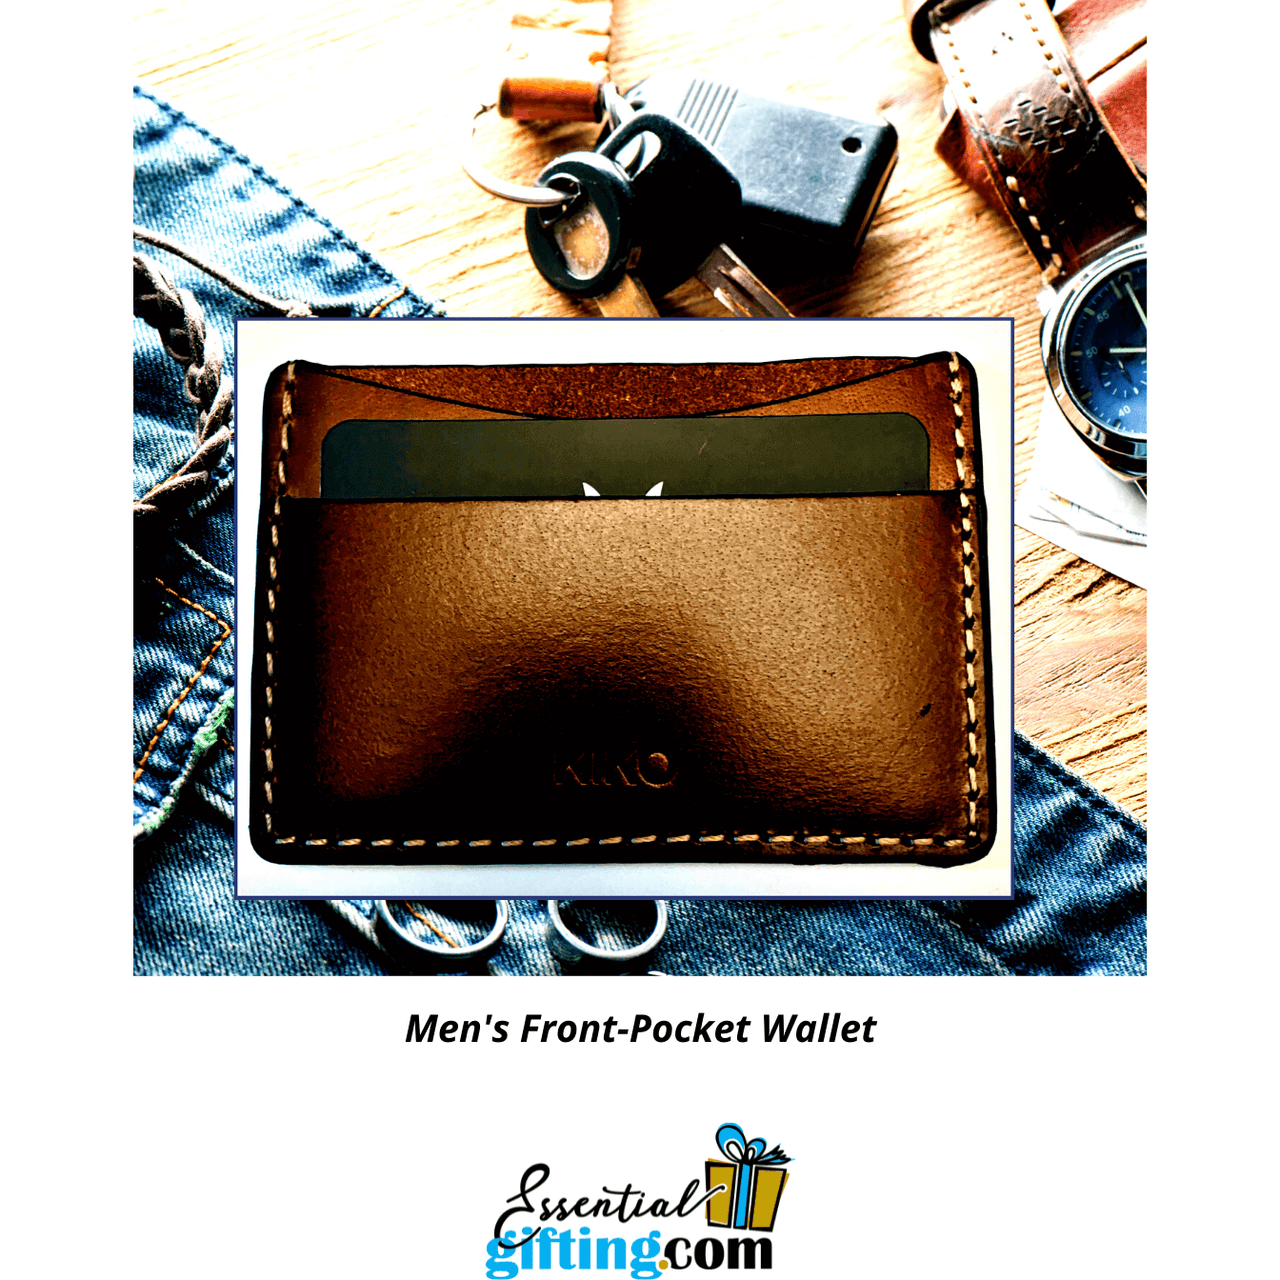 Stylish front-pocket wallet in dark leather, designed for men's organized essentials.